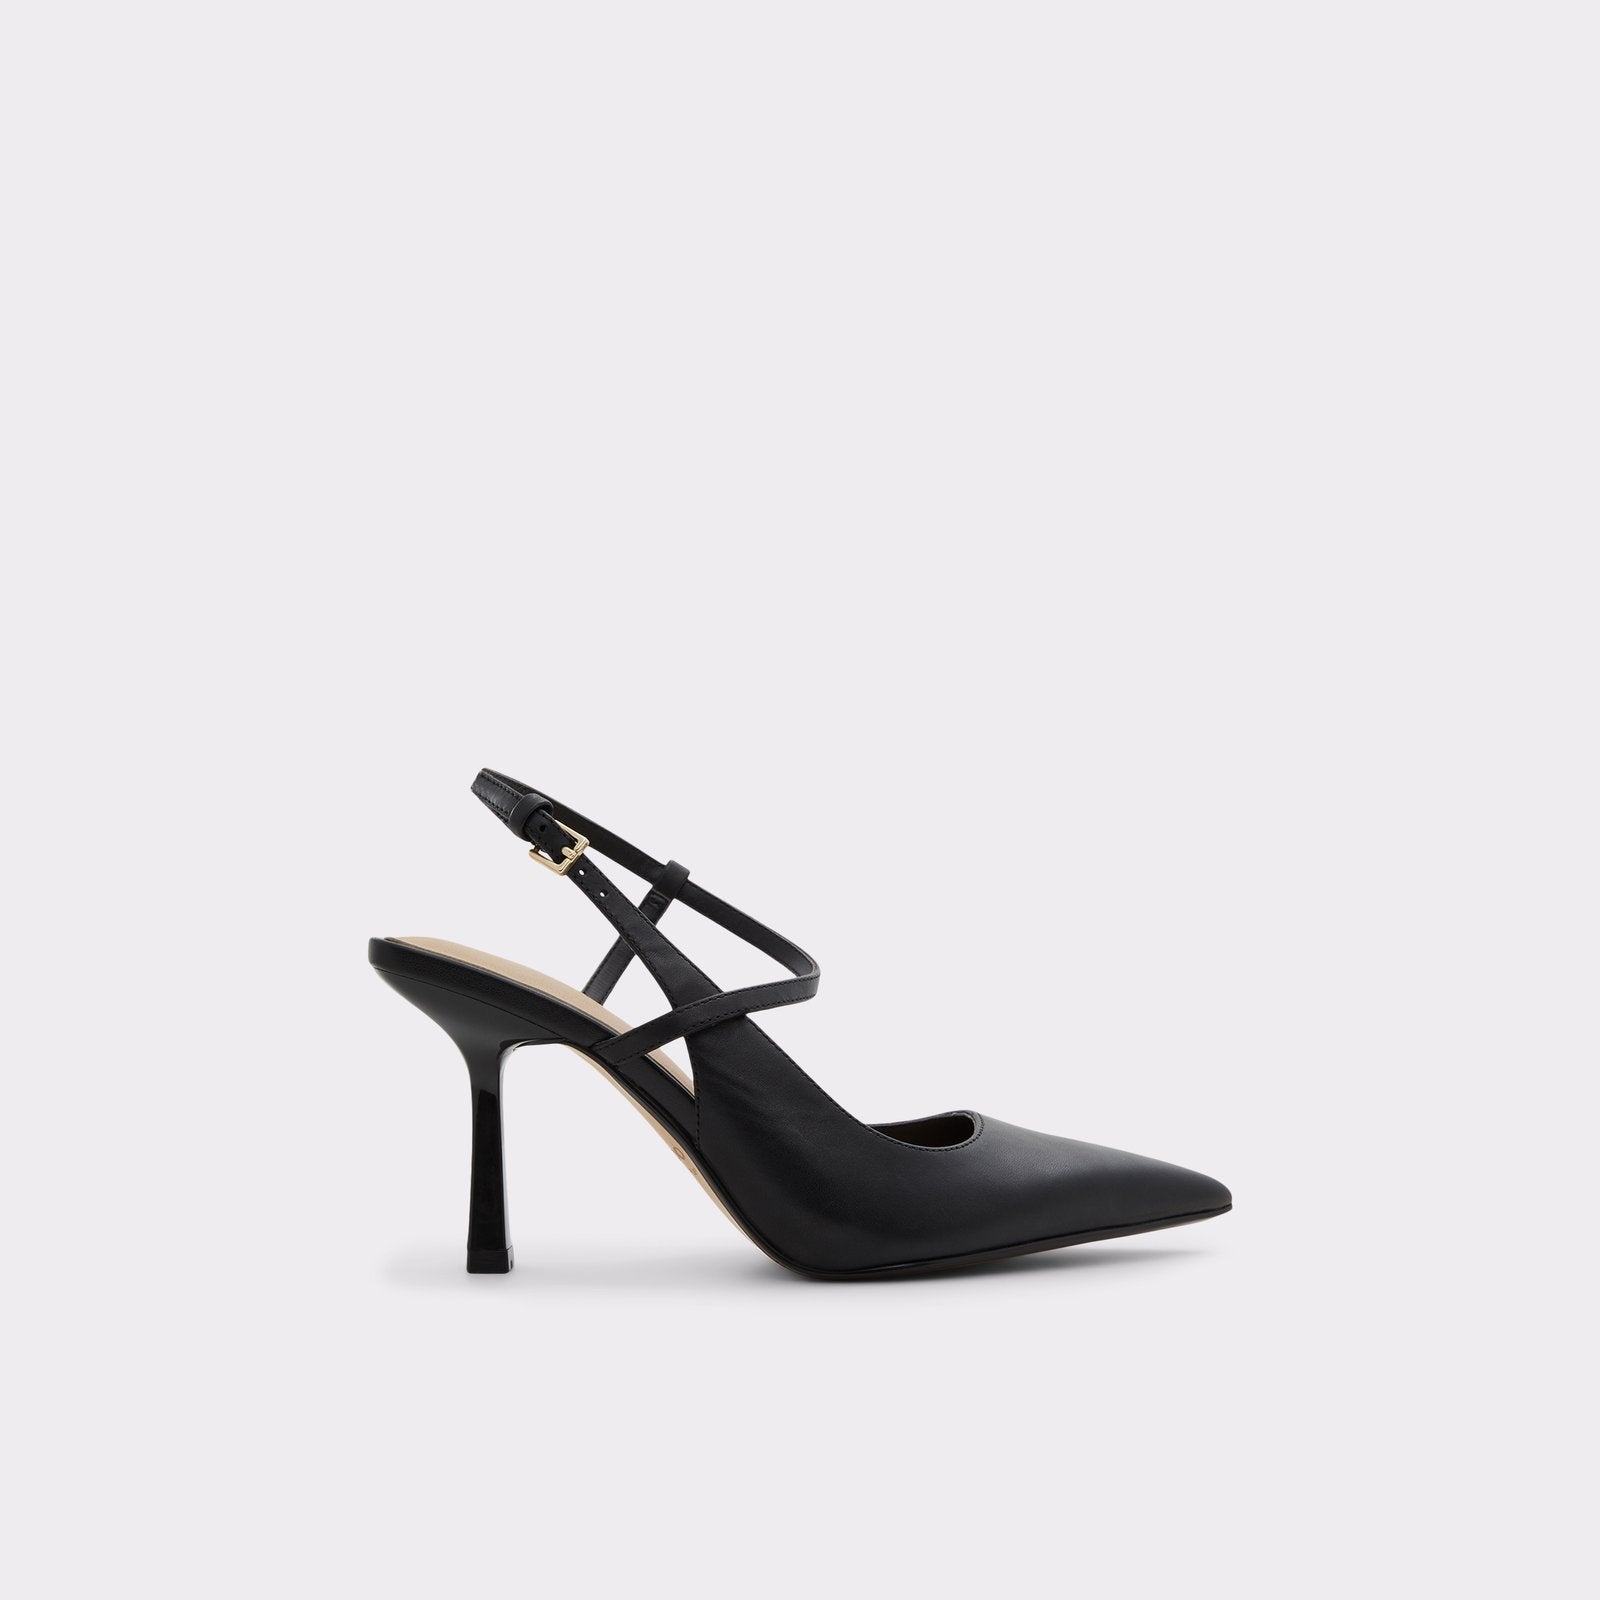 Aldo Women’s Heeled Shoes Brunette (Black)